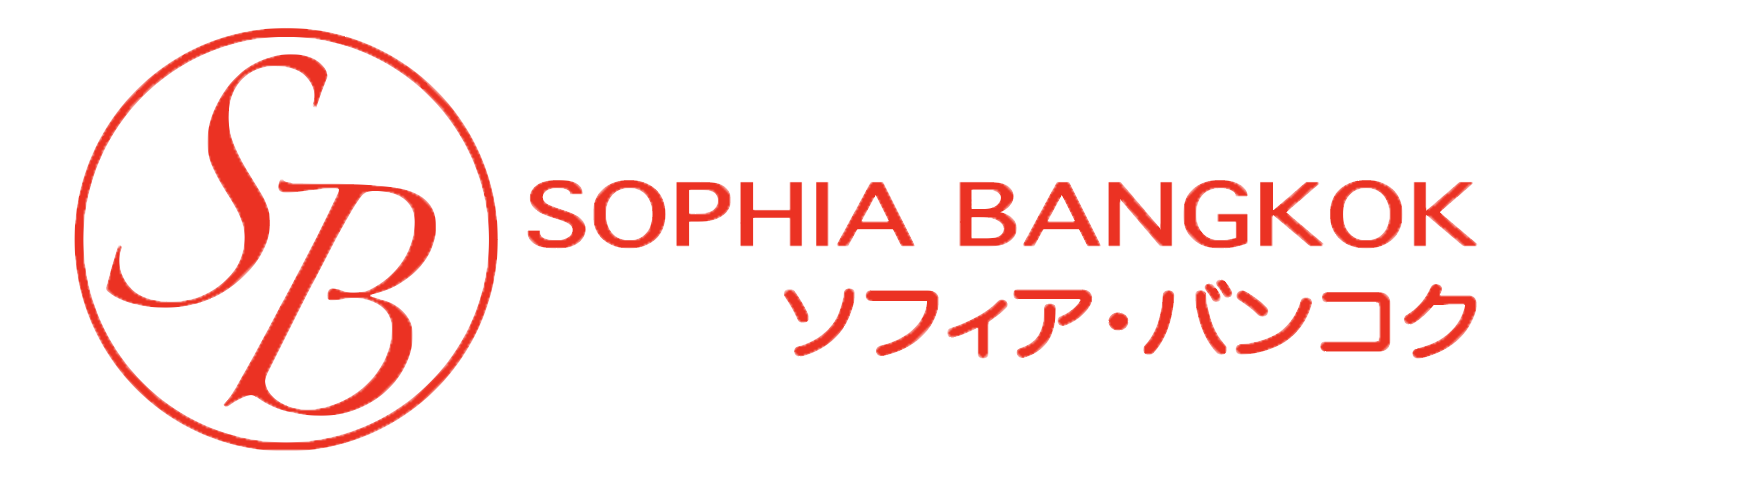 SOPHIA BANGKOK〜ソフィア・バンコク〜